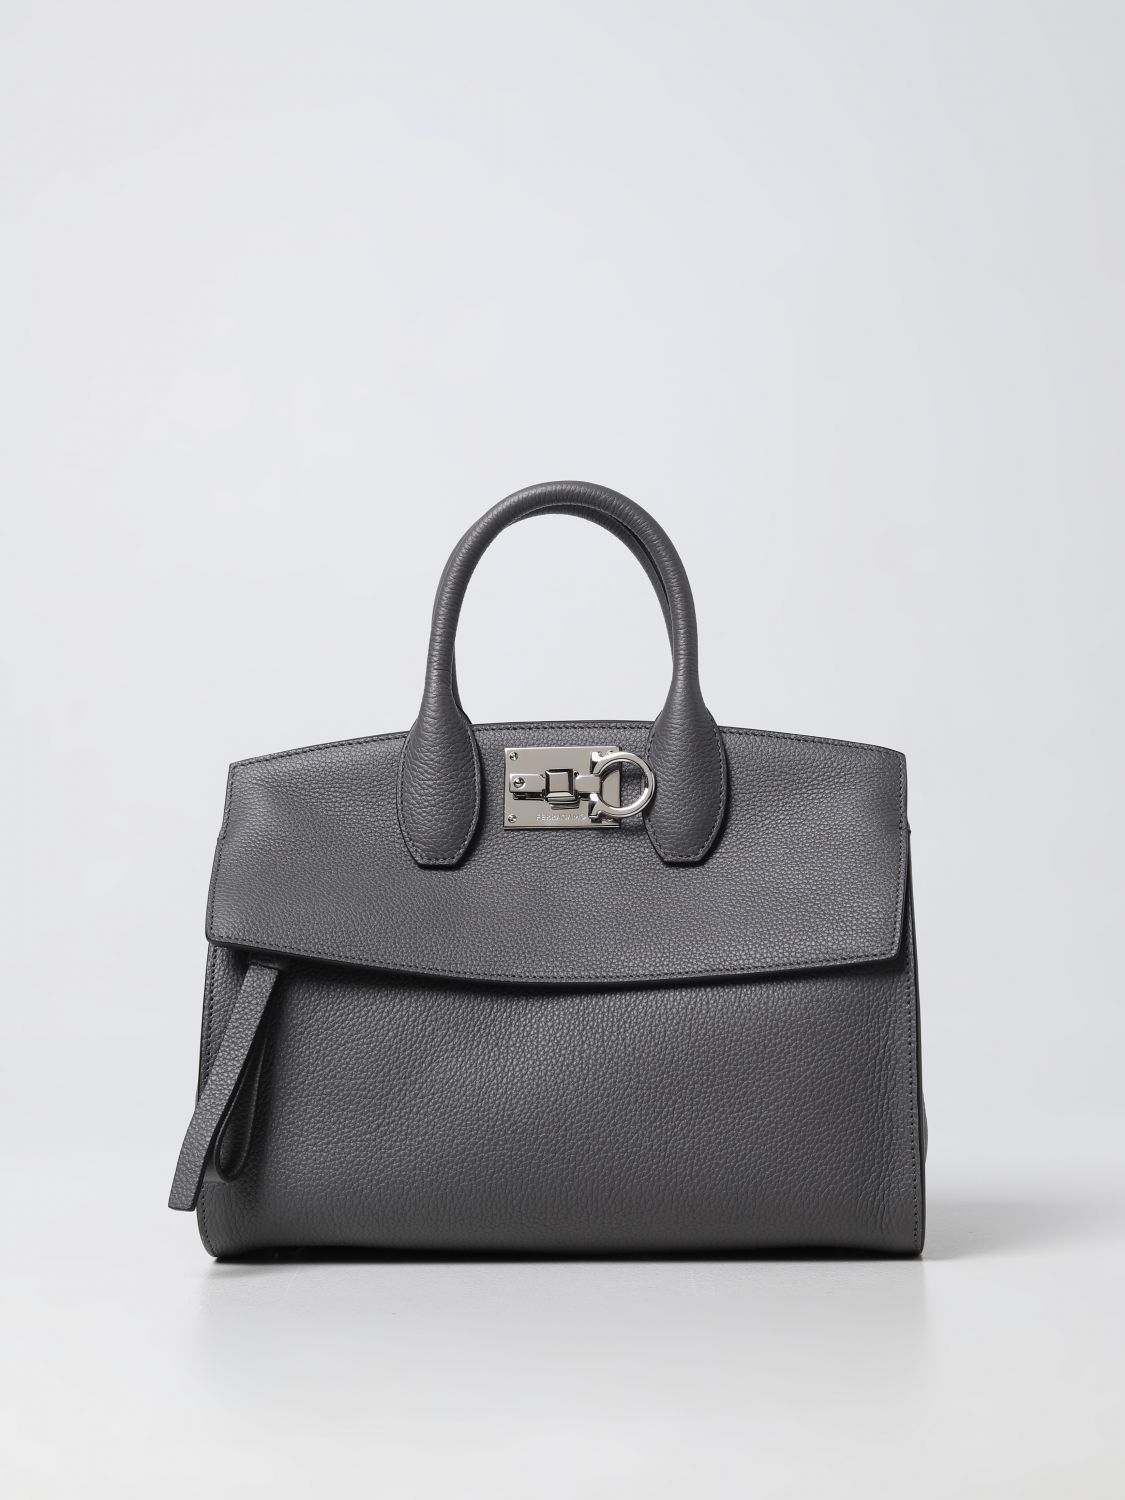 Ferragamo Men's Leather Gancio Studio Messenger Bag